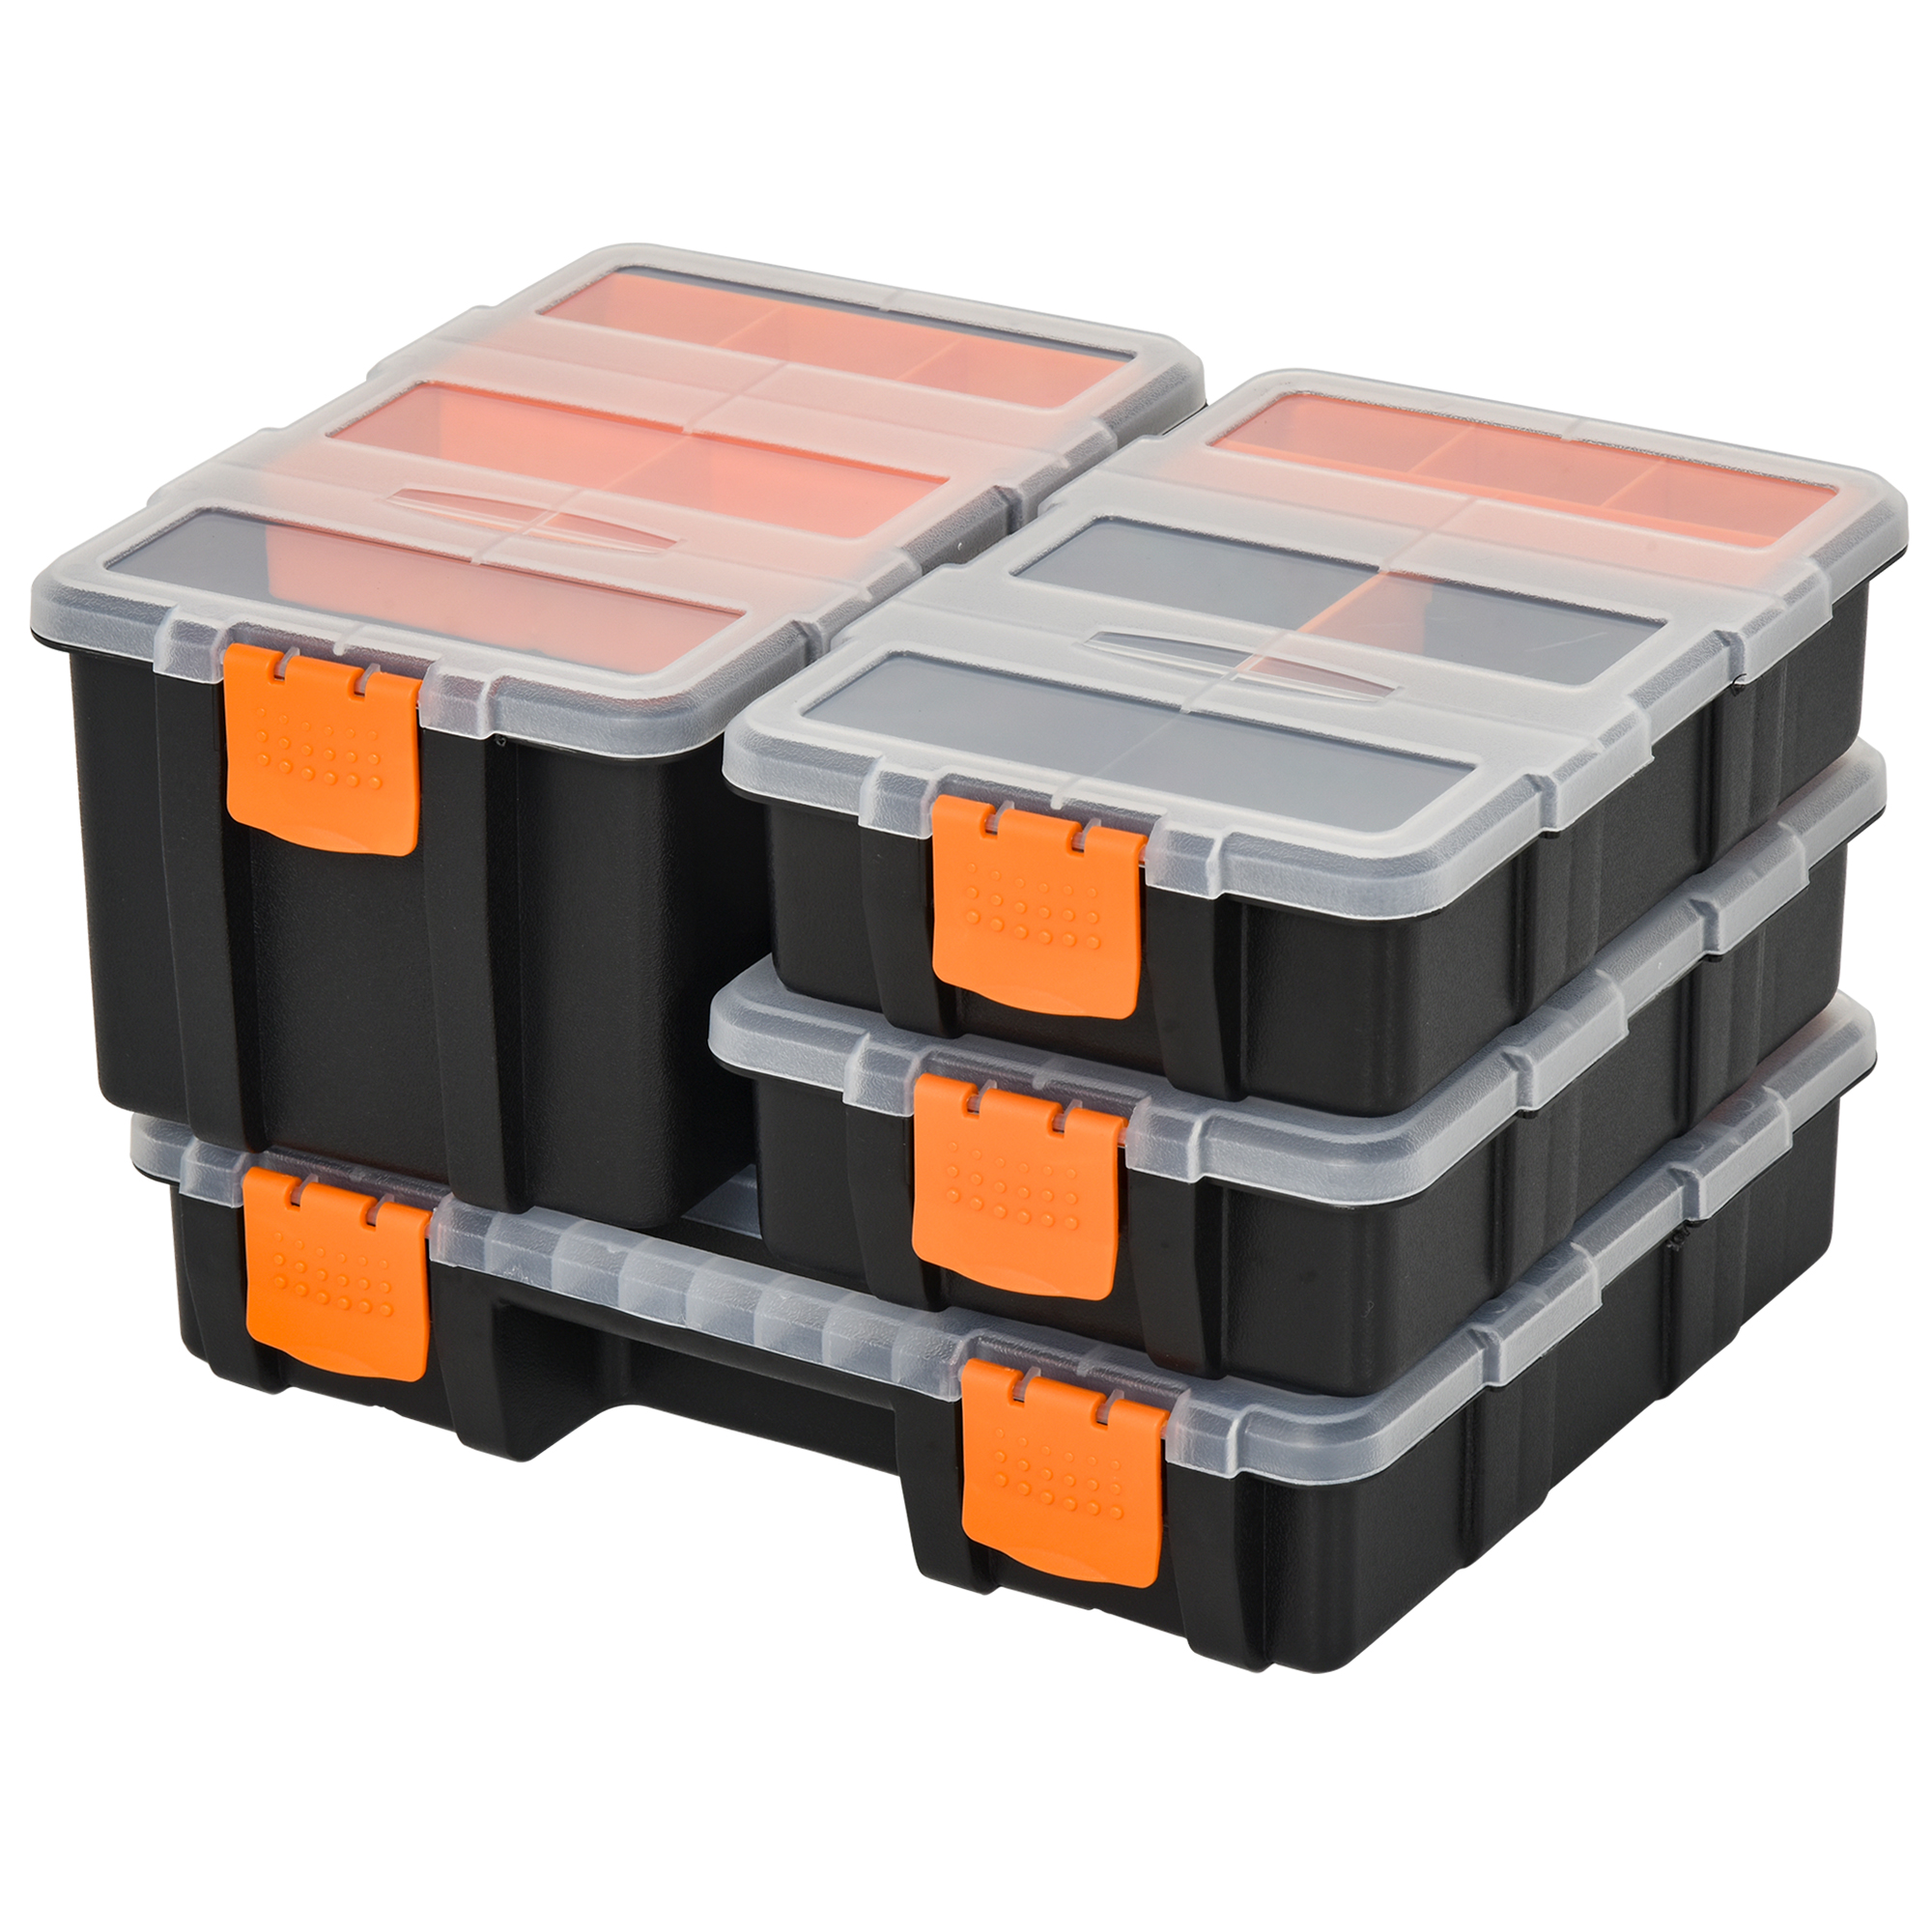 Image of DURHAND Tool Storage Box Set, 4-Pack, Various Sizes, PP Material, Hardware Organiser, Black/Orange